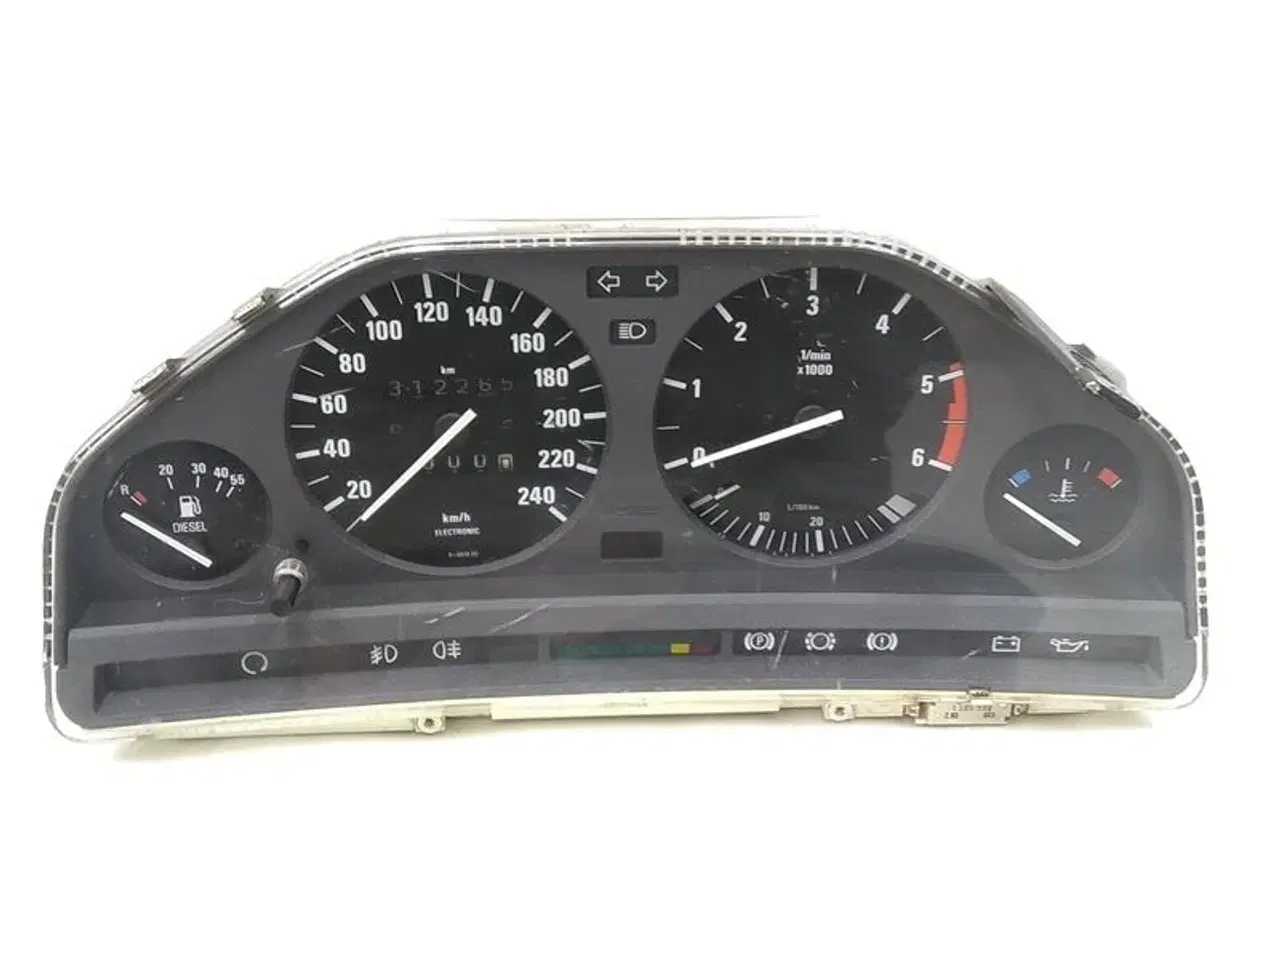 Billede 1 - Instrumentkombi MotoMeter Brugt 312265 km E13285 BMW E30